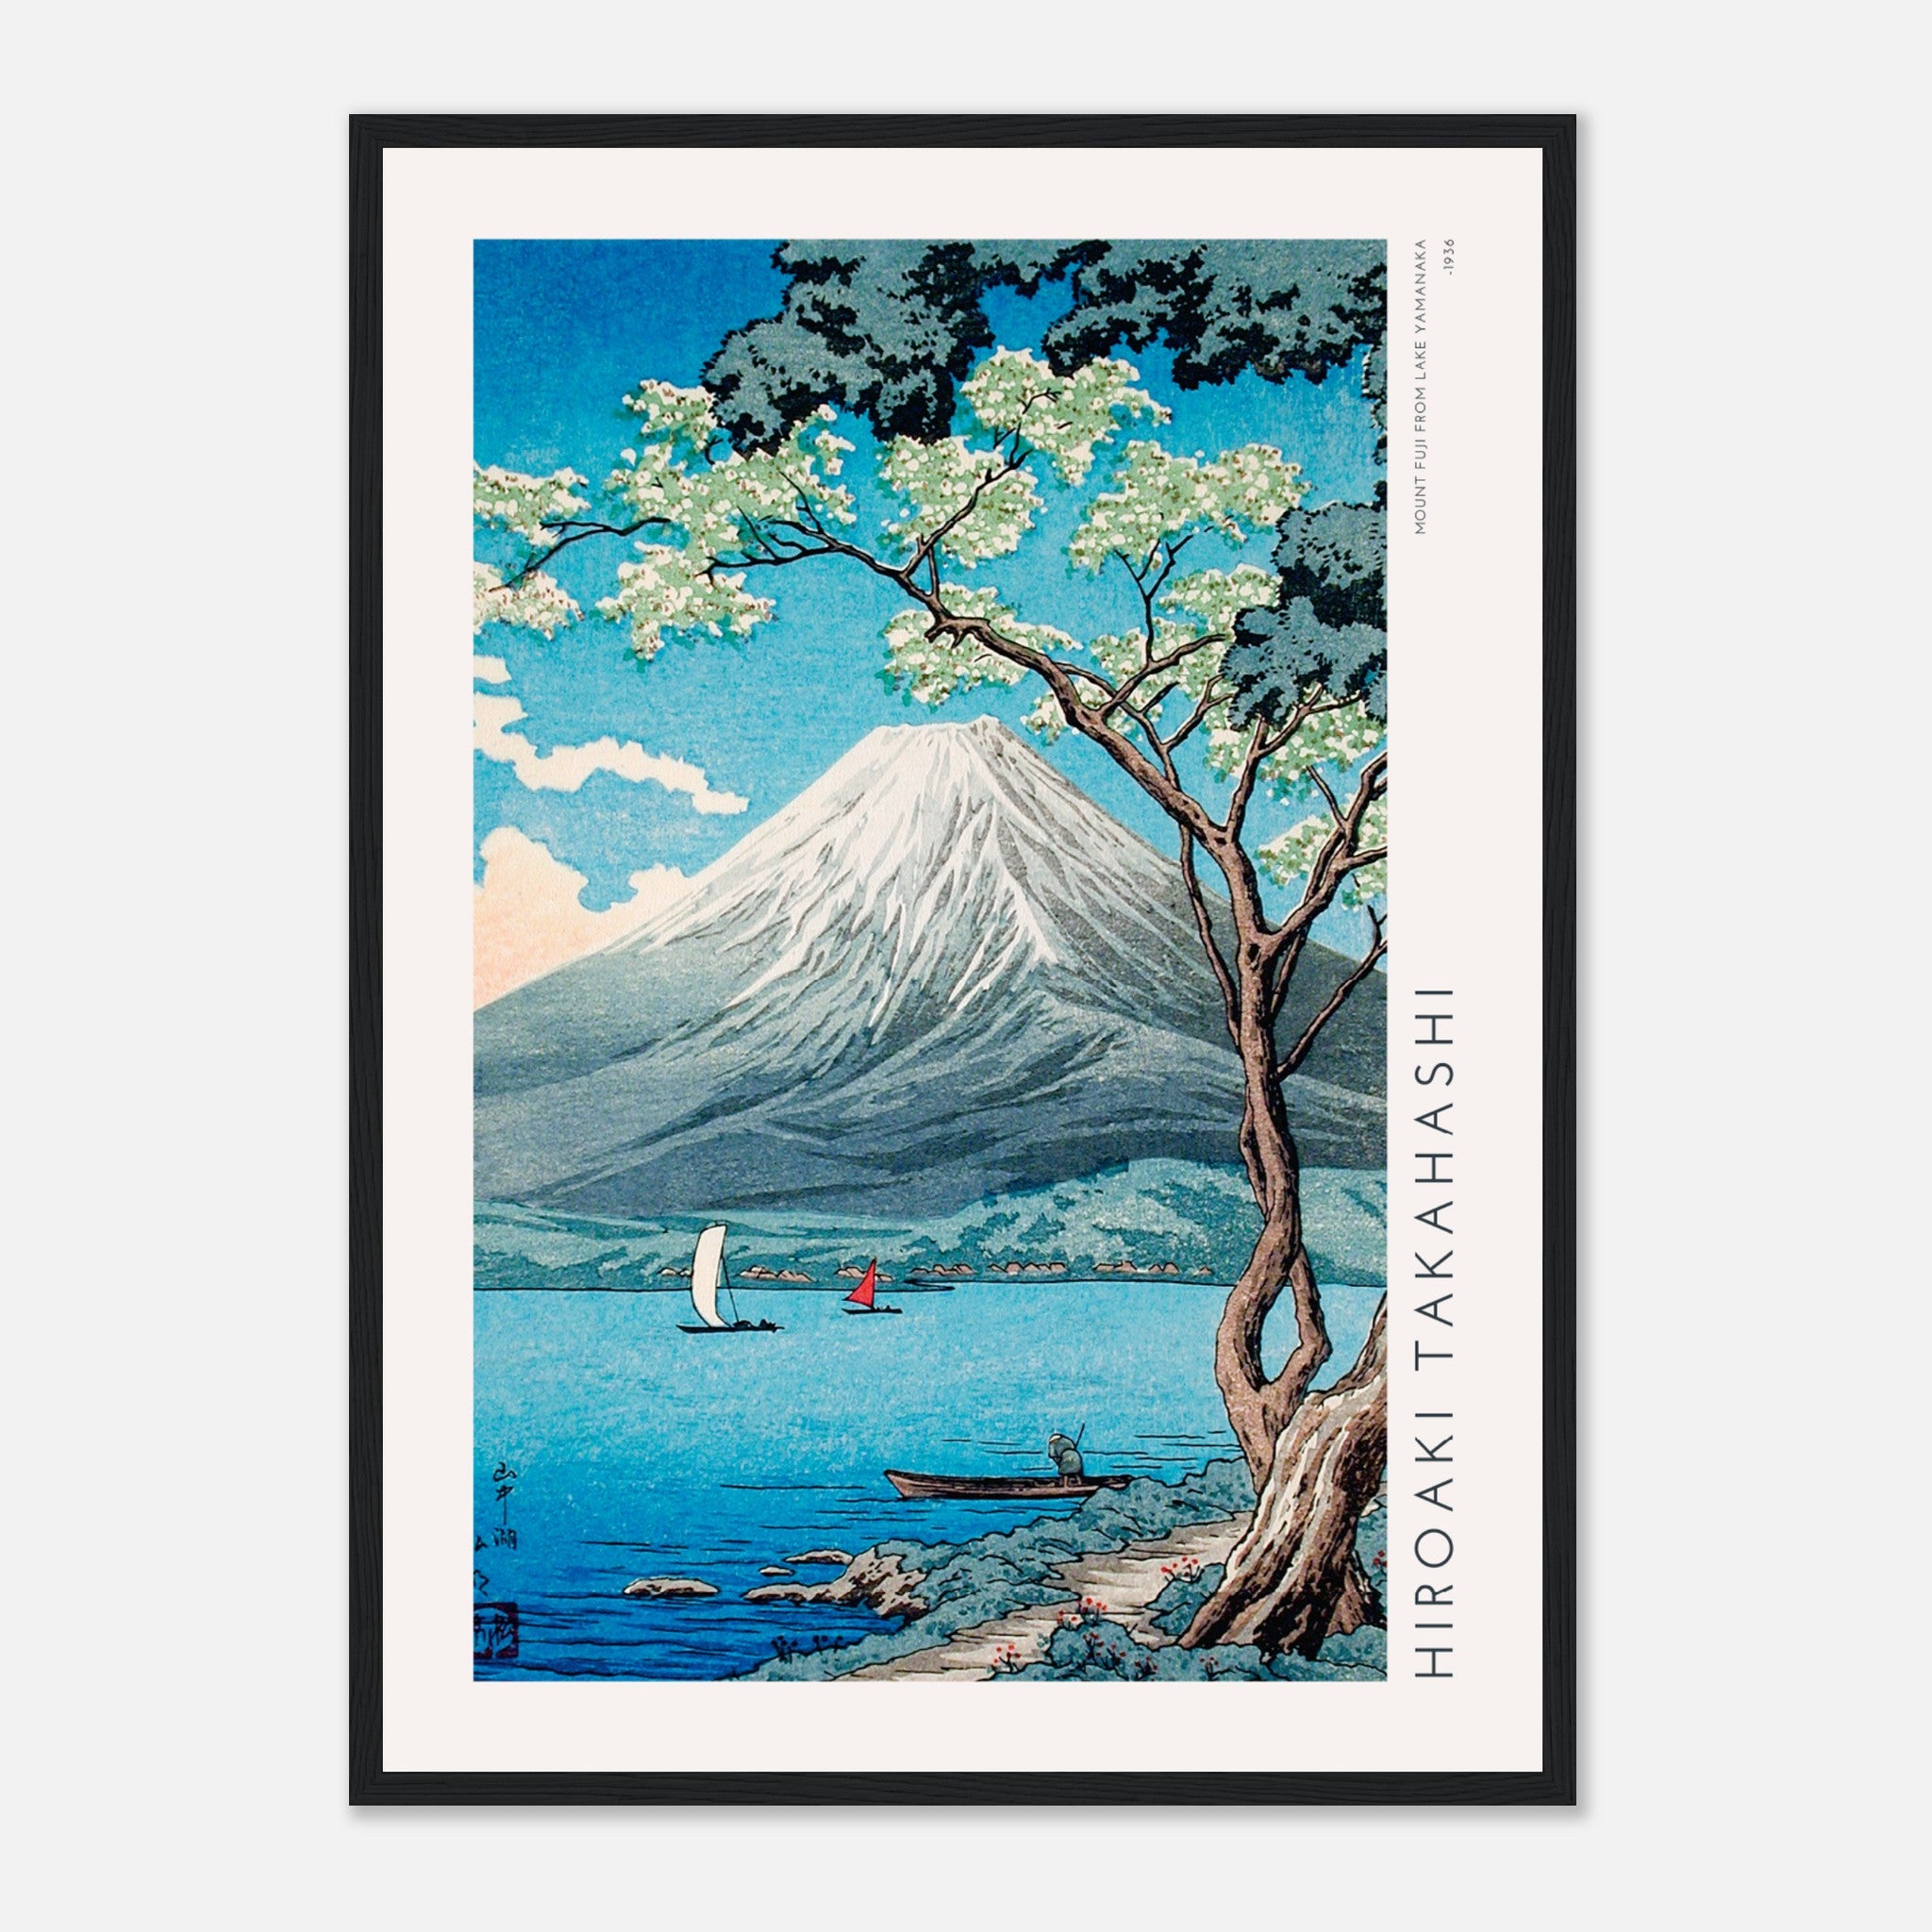 Mount Fuji from Lake Yamanaka Poster